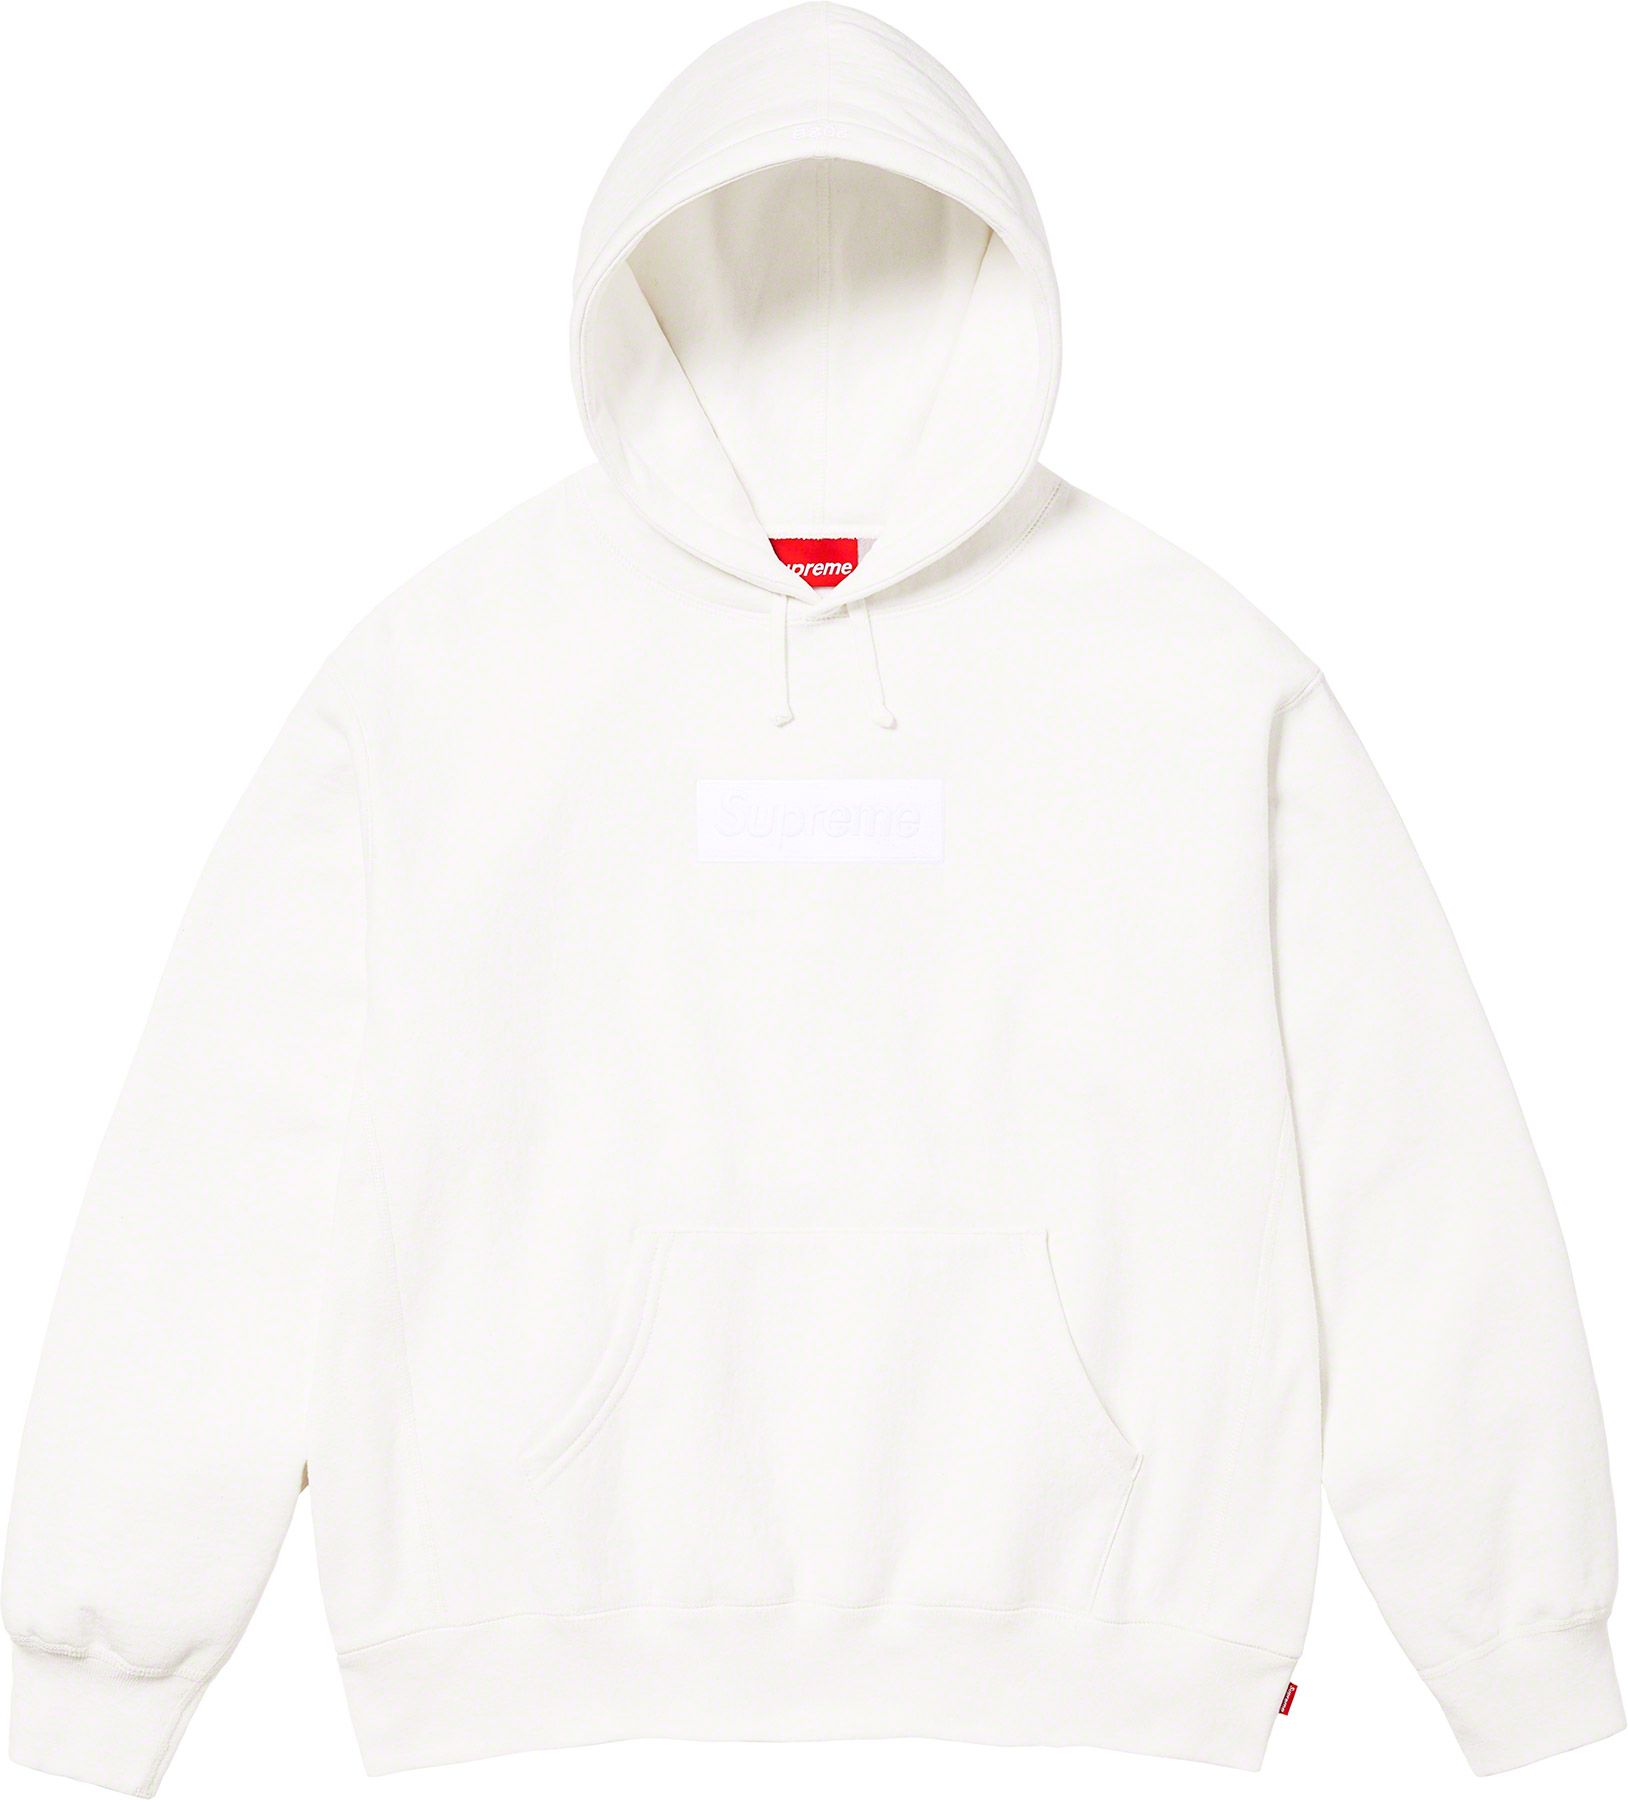 Supreme Box Logo Hooded SweatshirtサイズS